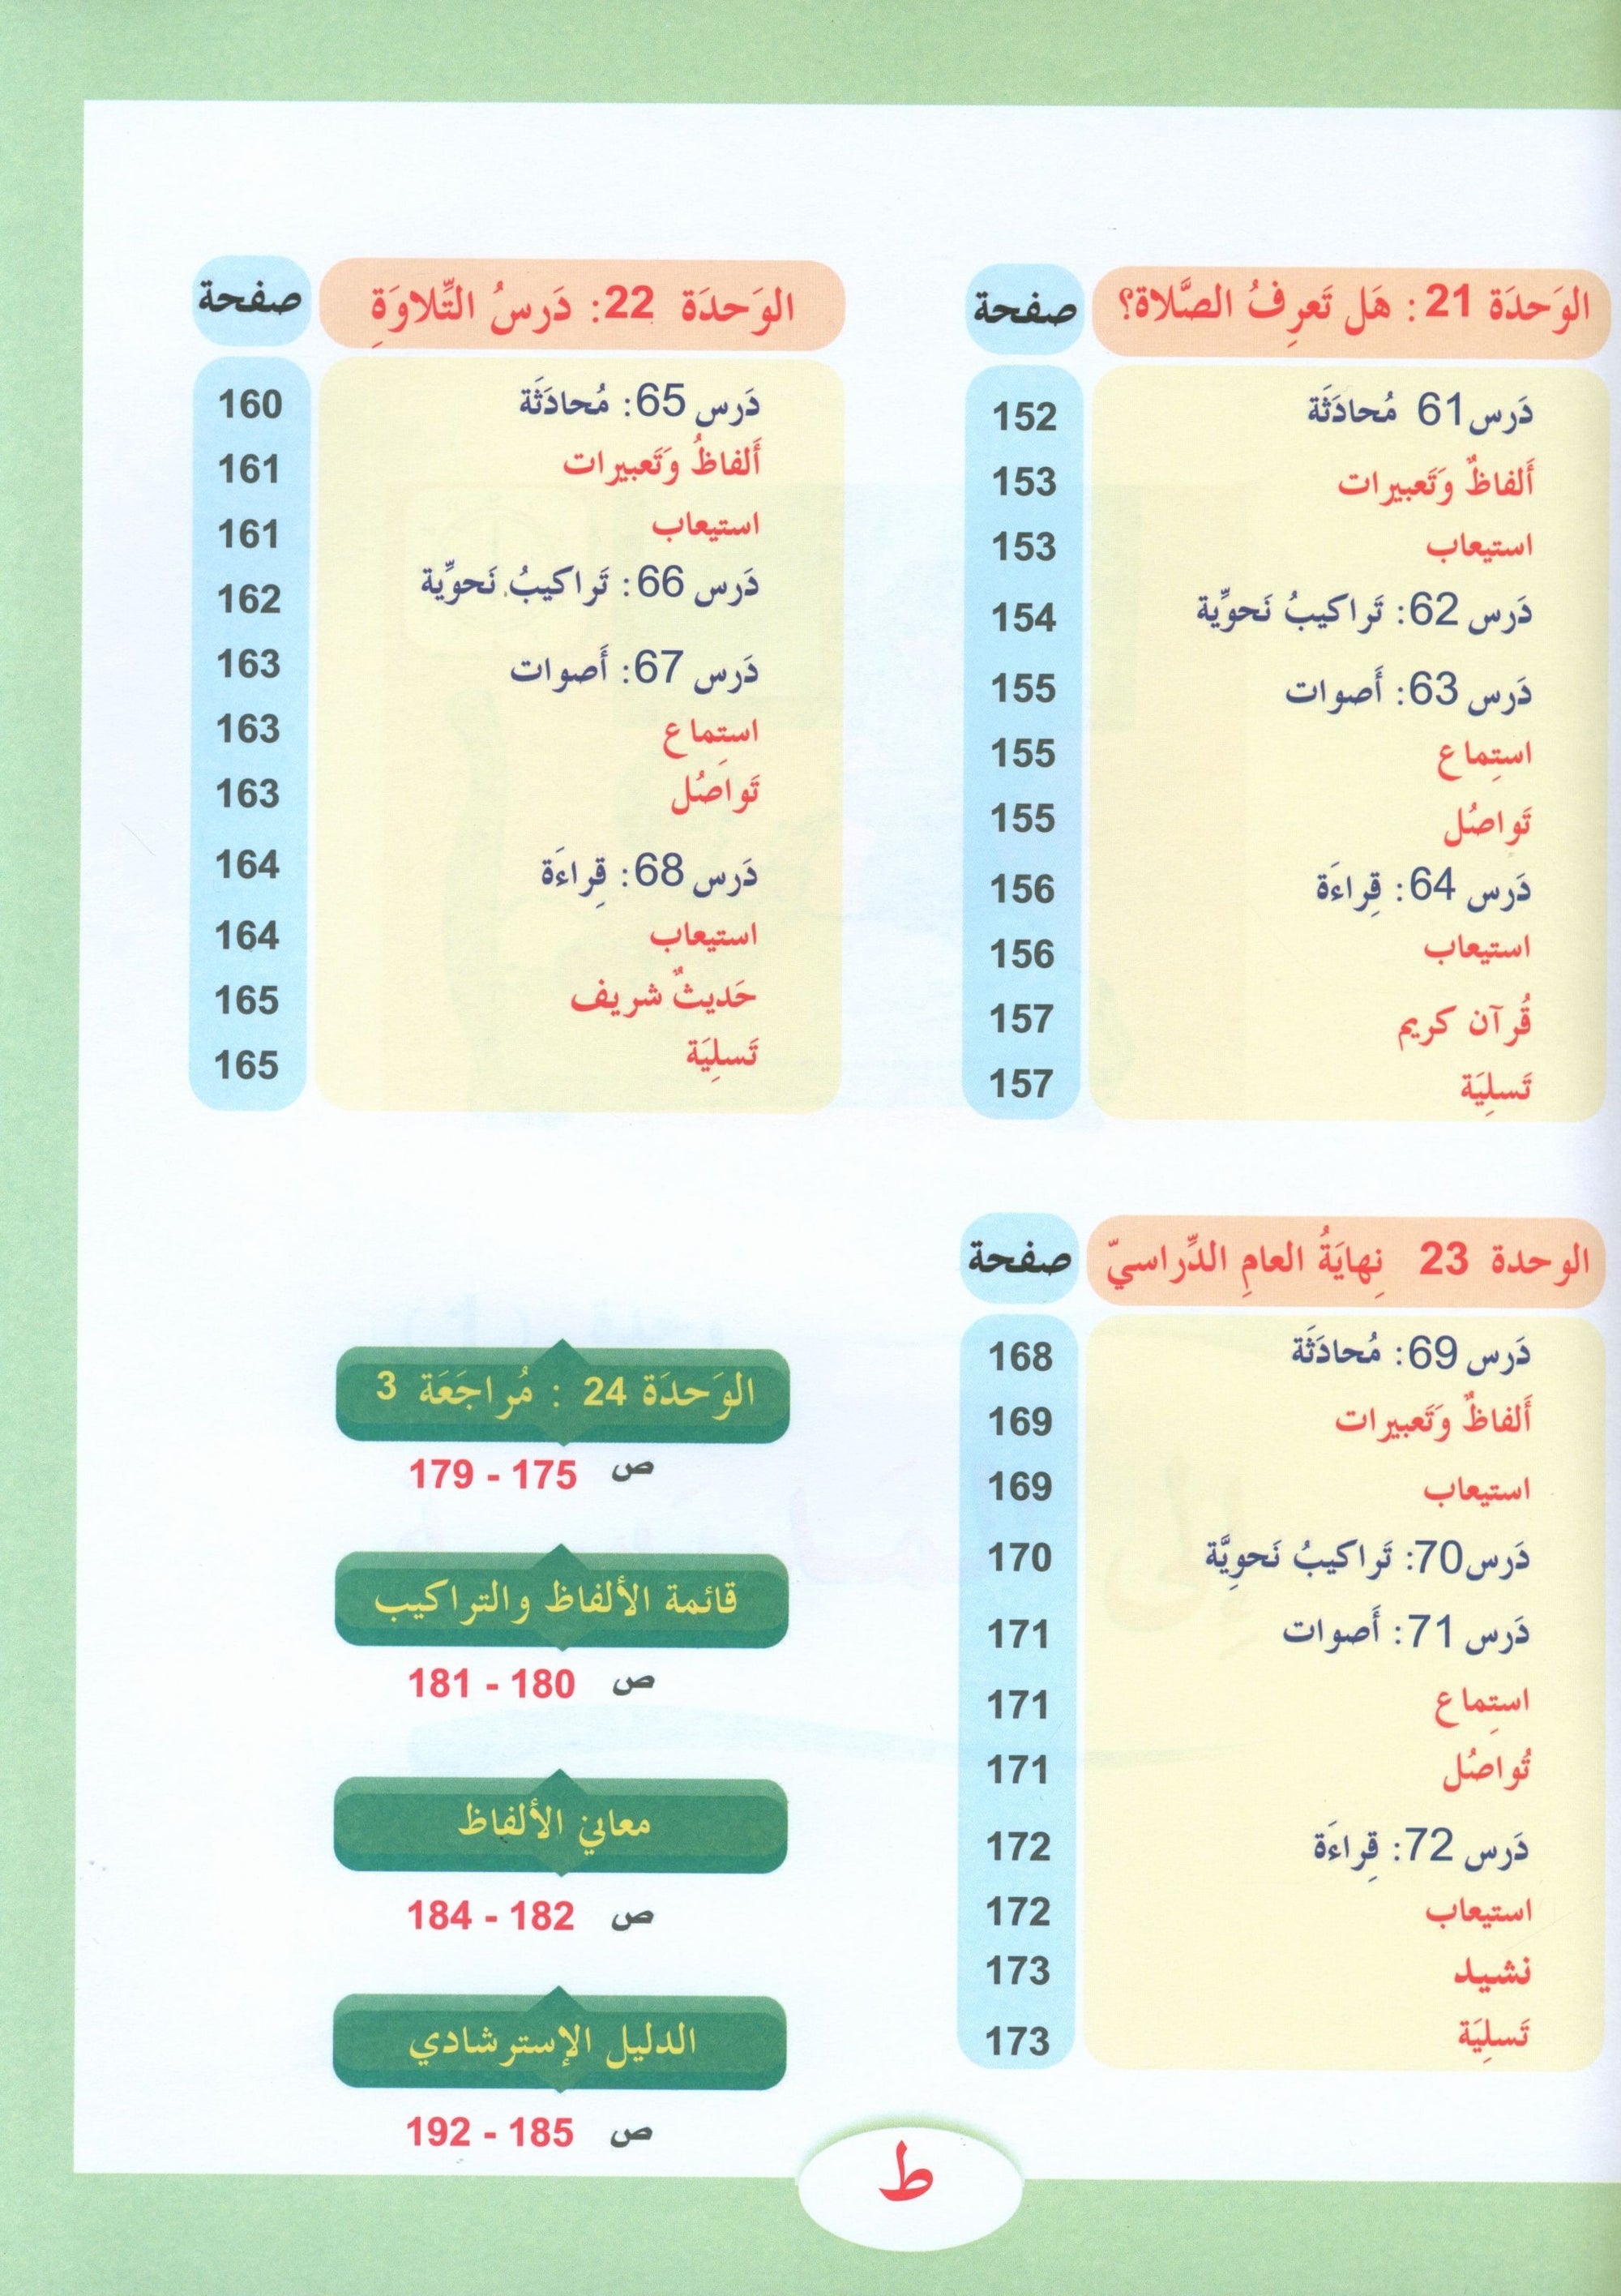 ICO Learn Arabic Textbook Level 3 (Combined Edition, with Access Code)  تعلم العربية كتاب التلميذ